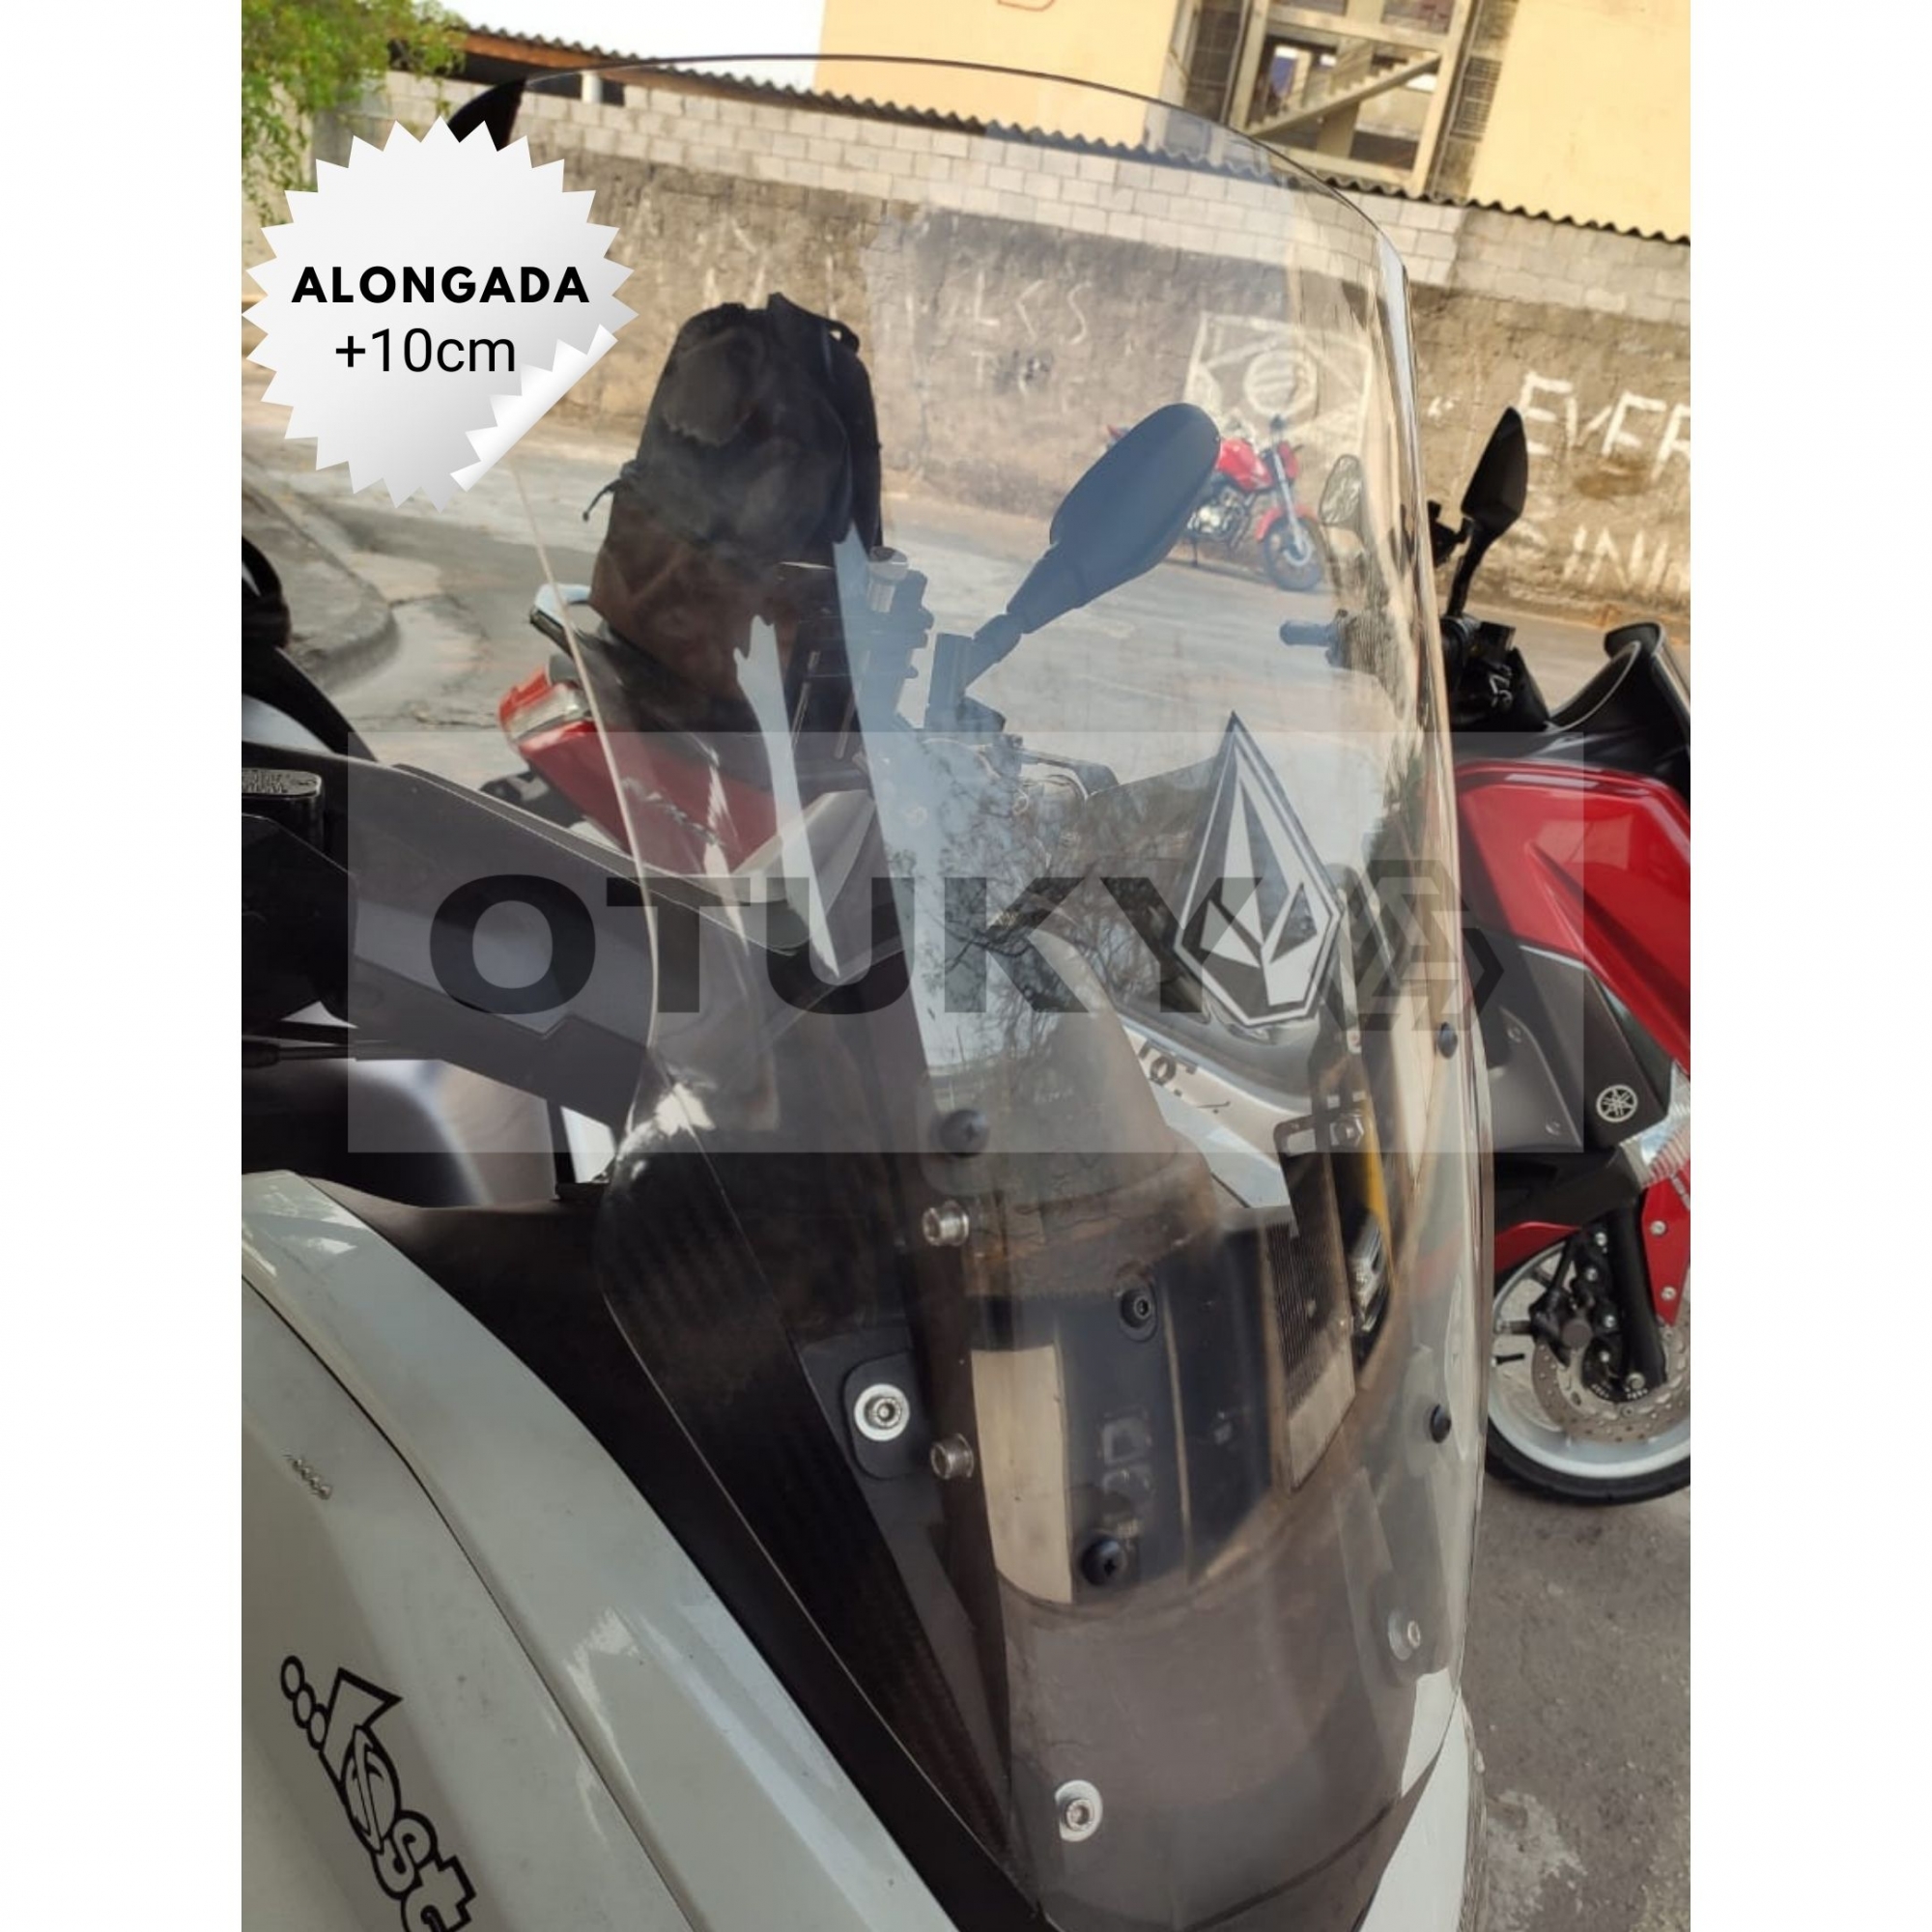 Bolha para Moto Nmax 160 2017 2018 2019 2020 Alongada +10cm Otuky